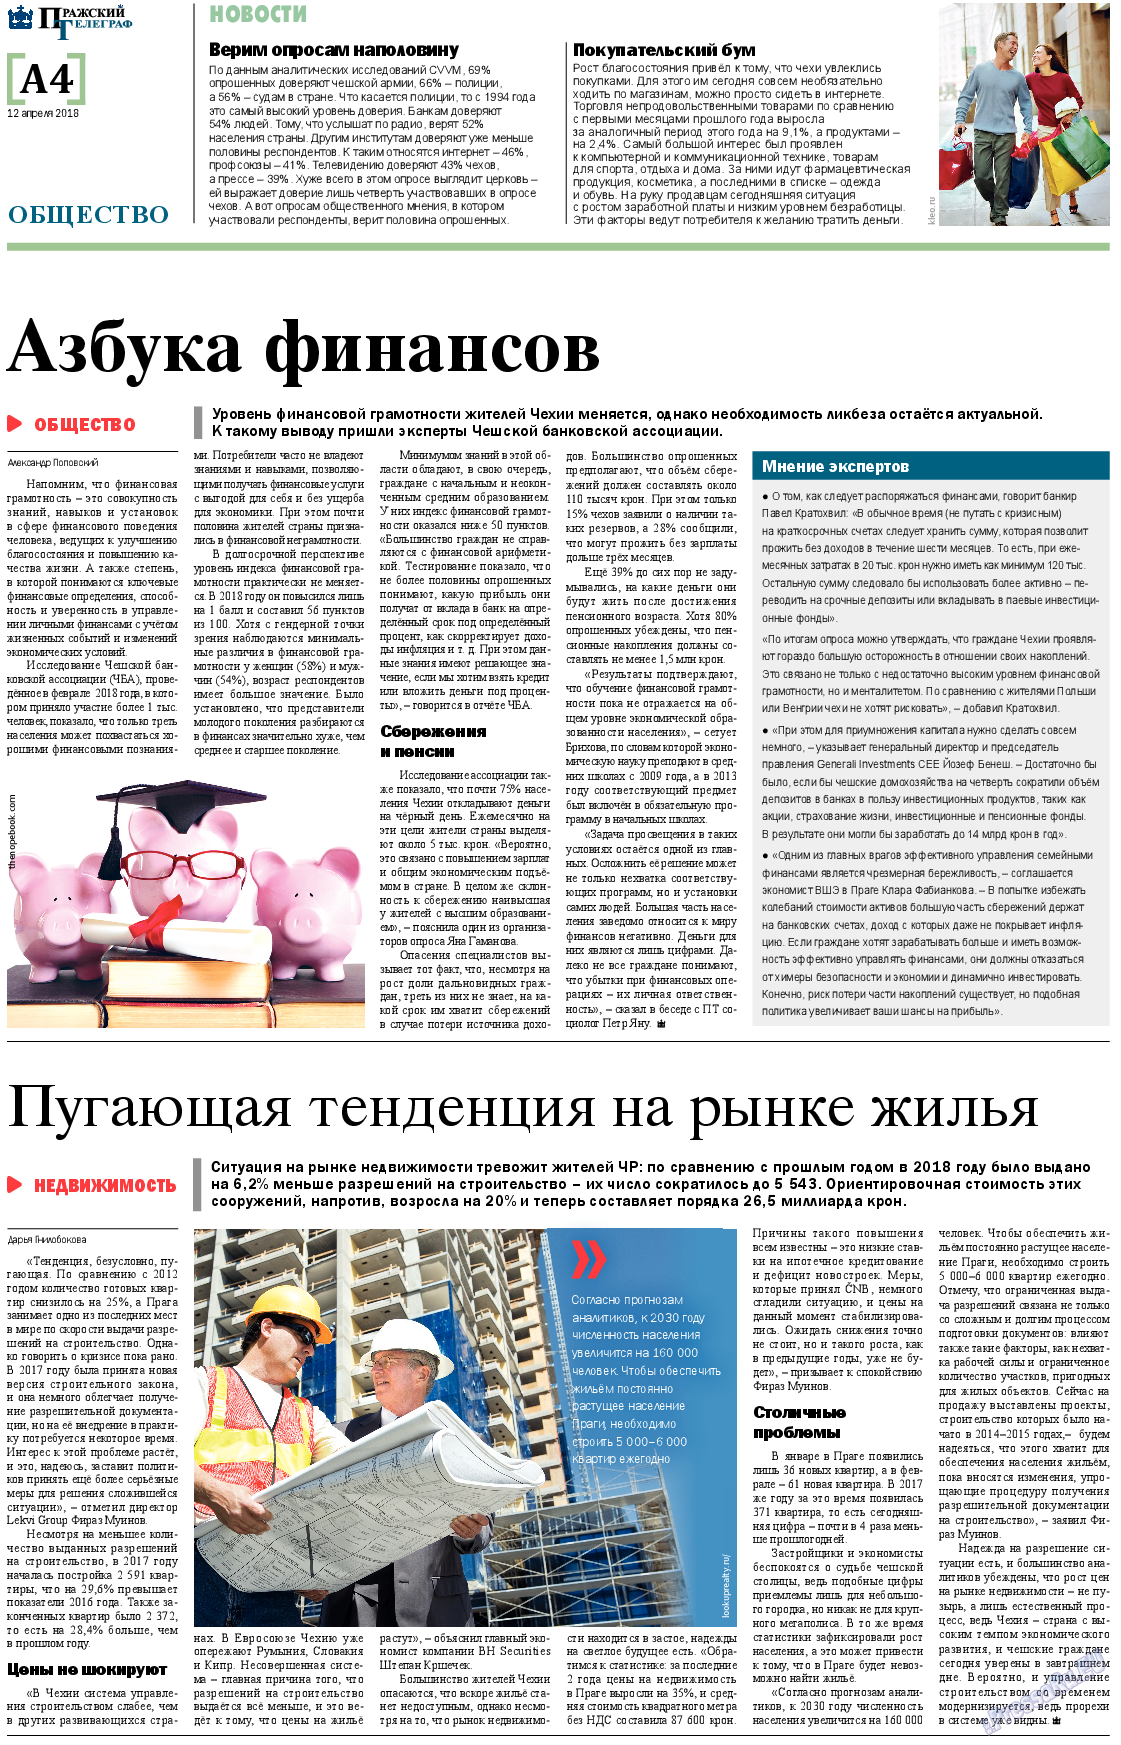 Пражский телеграф, газета. 2018 №15 стр.4